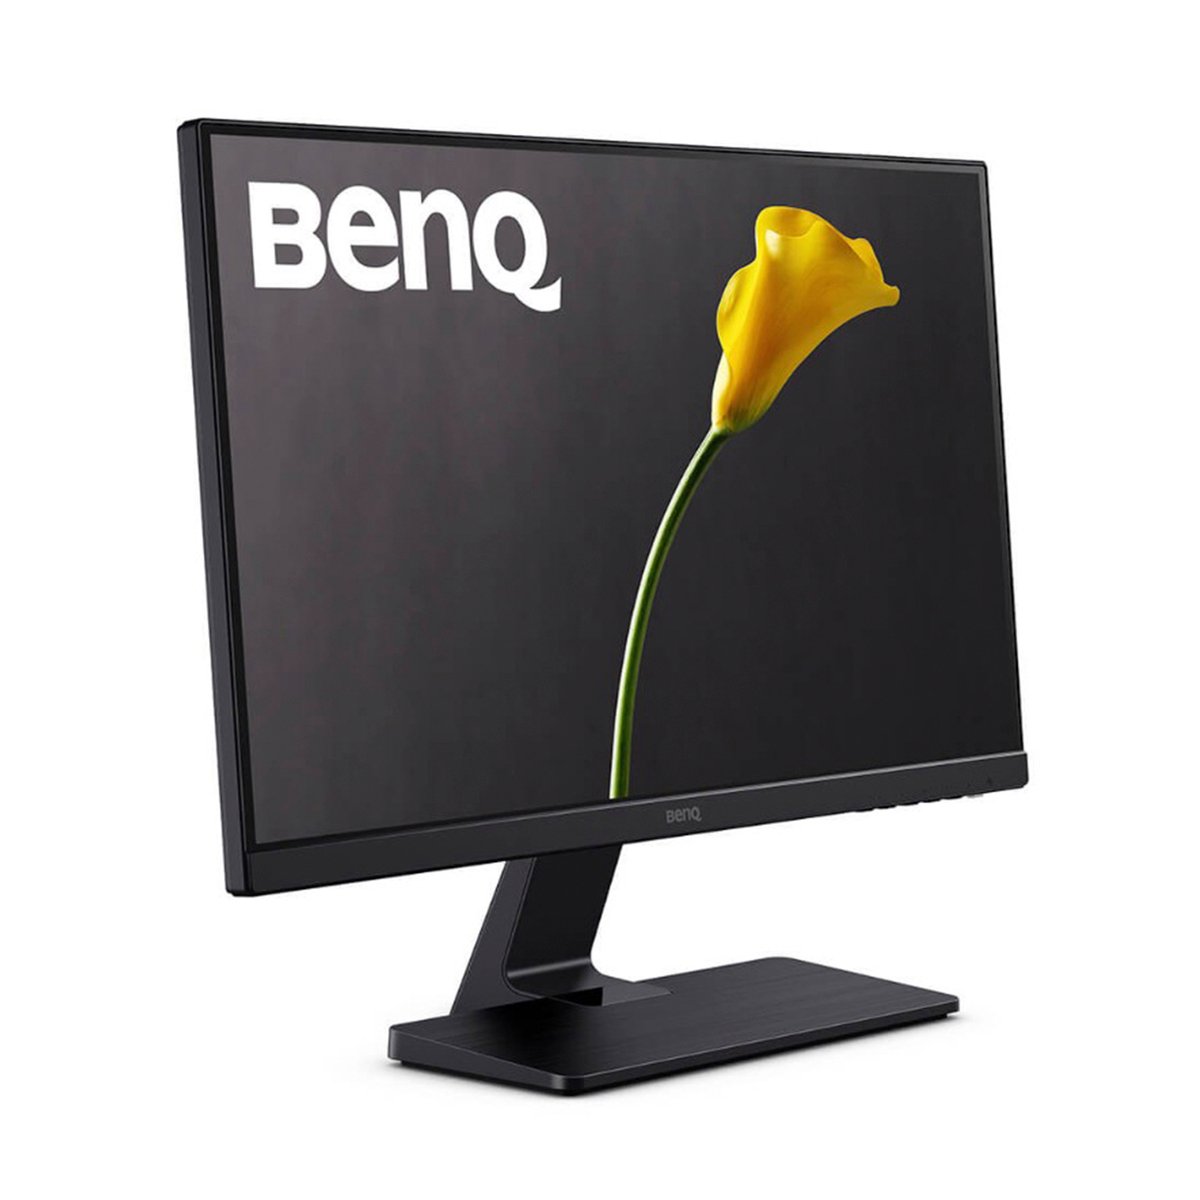 Benq Stylish LED Monitor with Eye-care Technology, FHD, HDMI | GW2475H